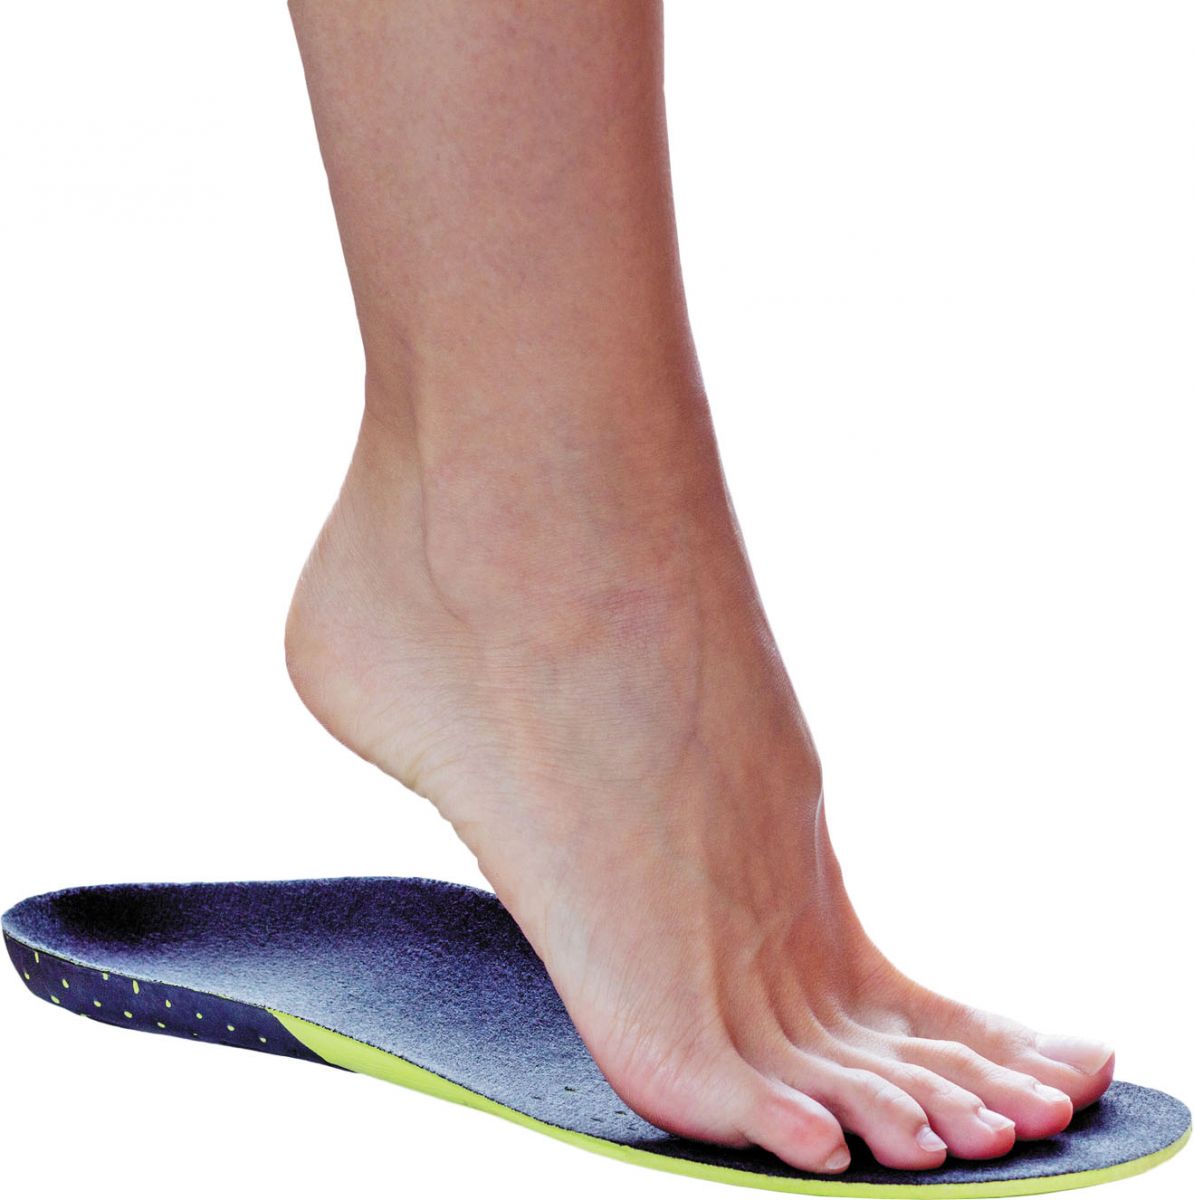 pain relief orthotics for heel pain